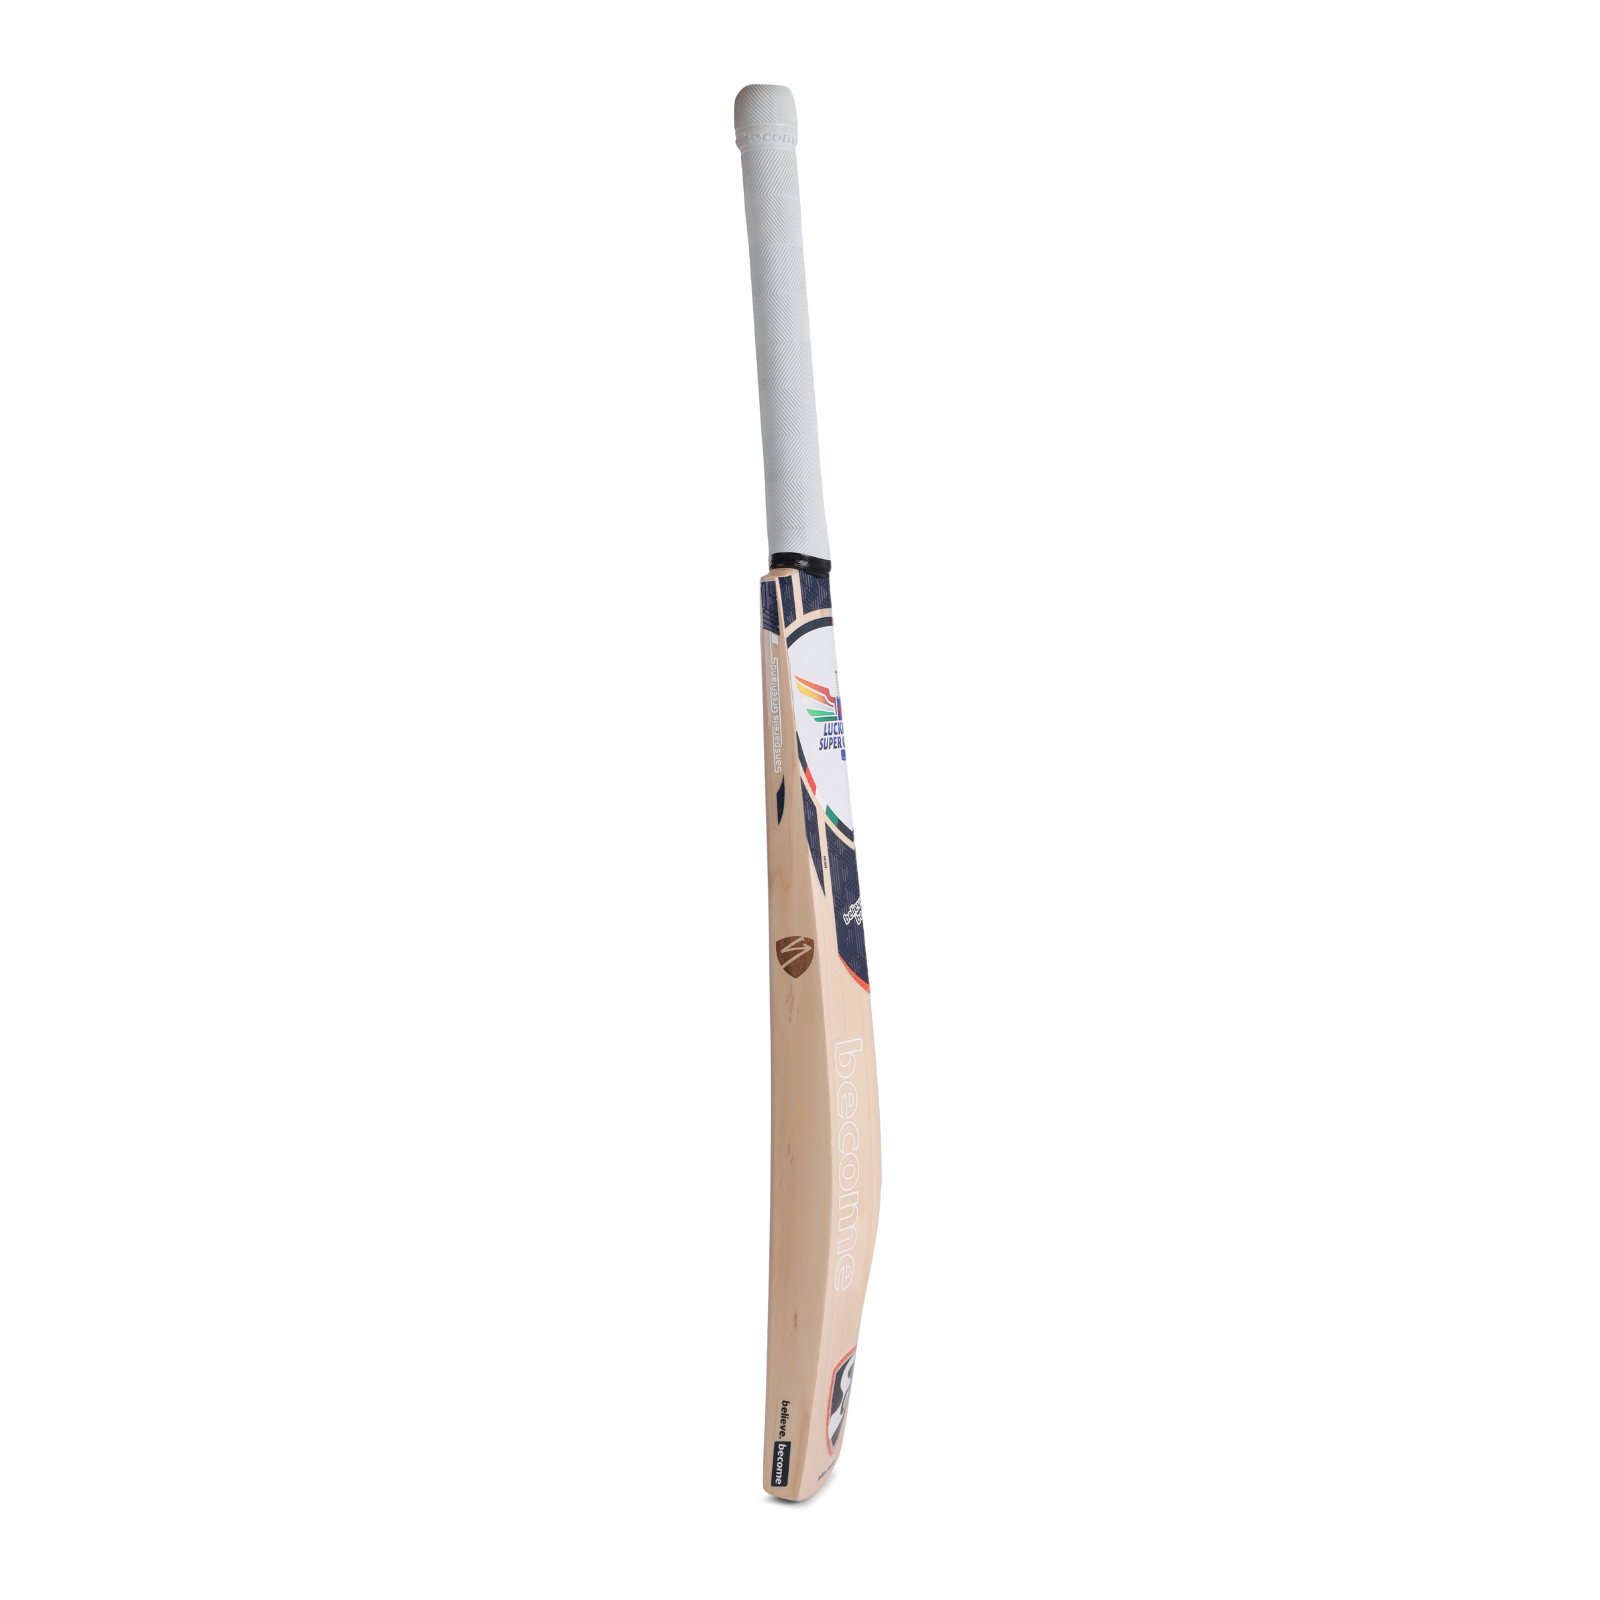 Cricket Bat SG X LSG 4 0